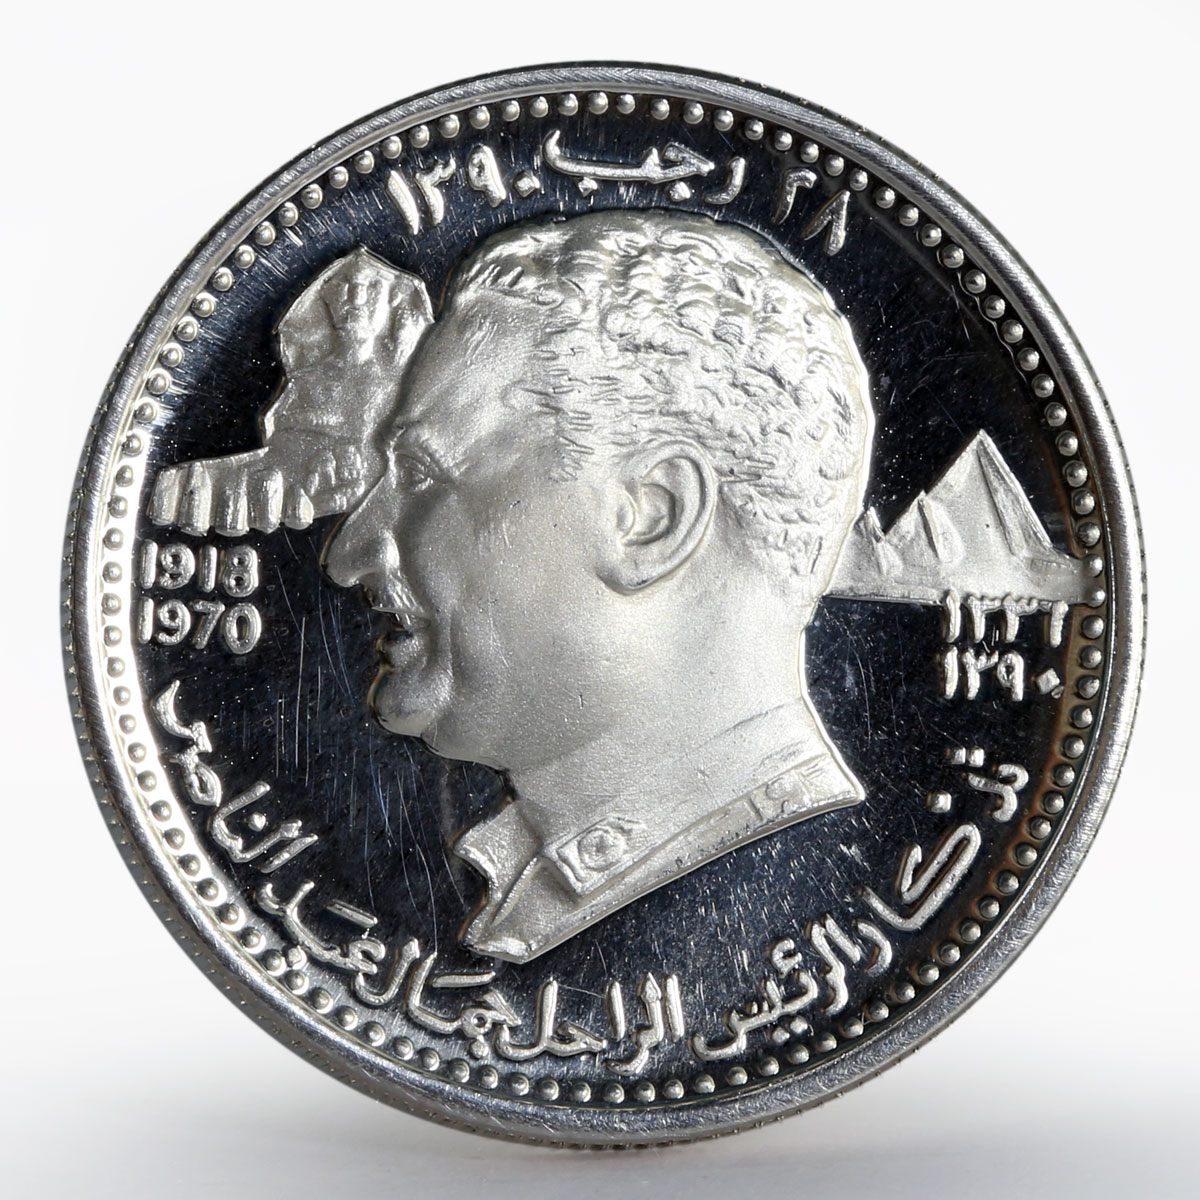 Ajman 5 riyals Memorial of President Gamal Abdel Nasser proof silver coin 1970